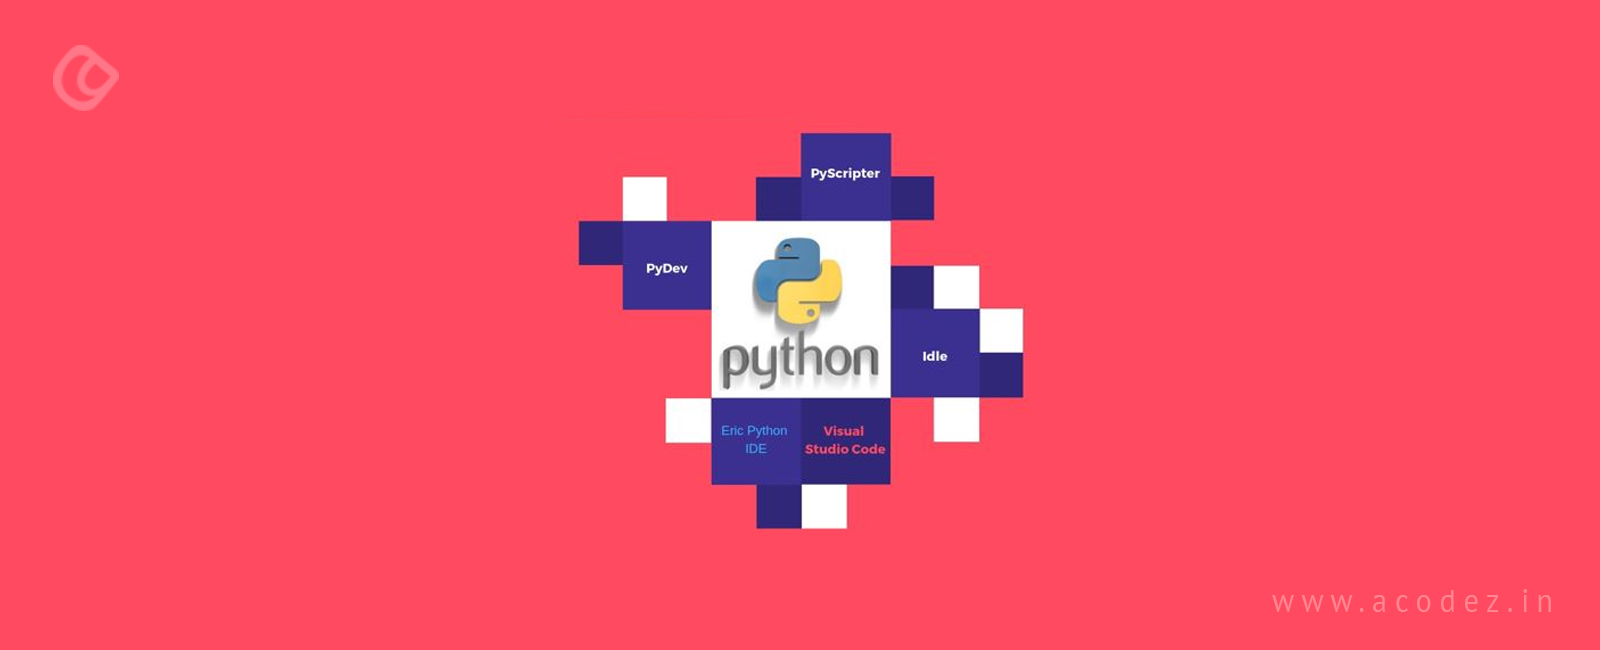 best python ide for mac 2018